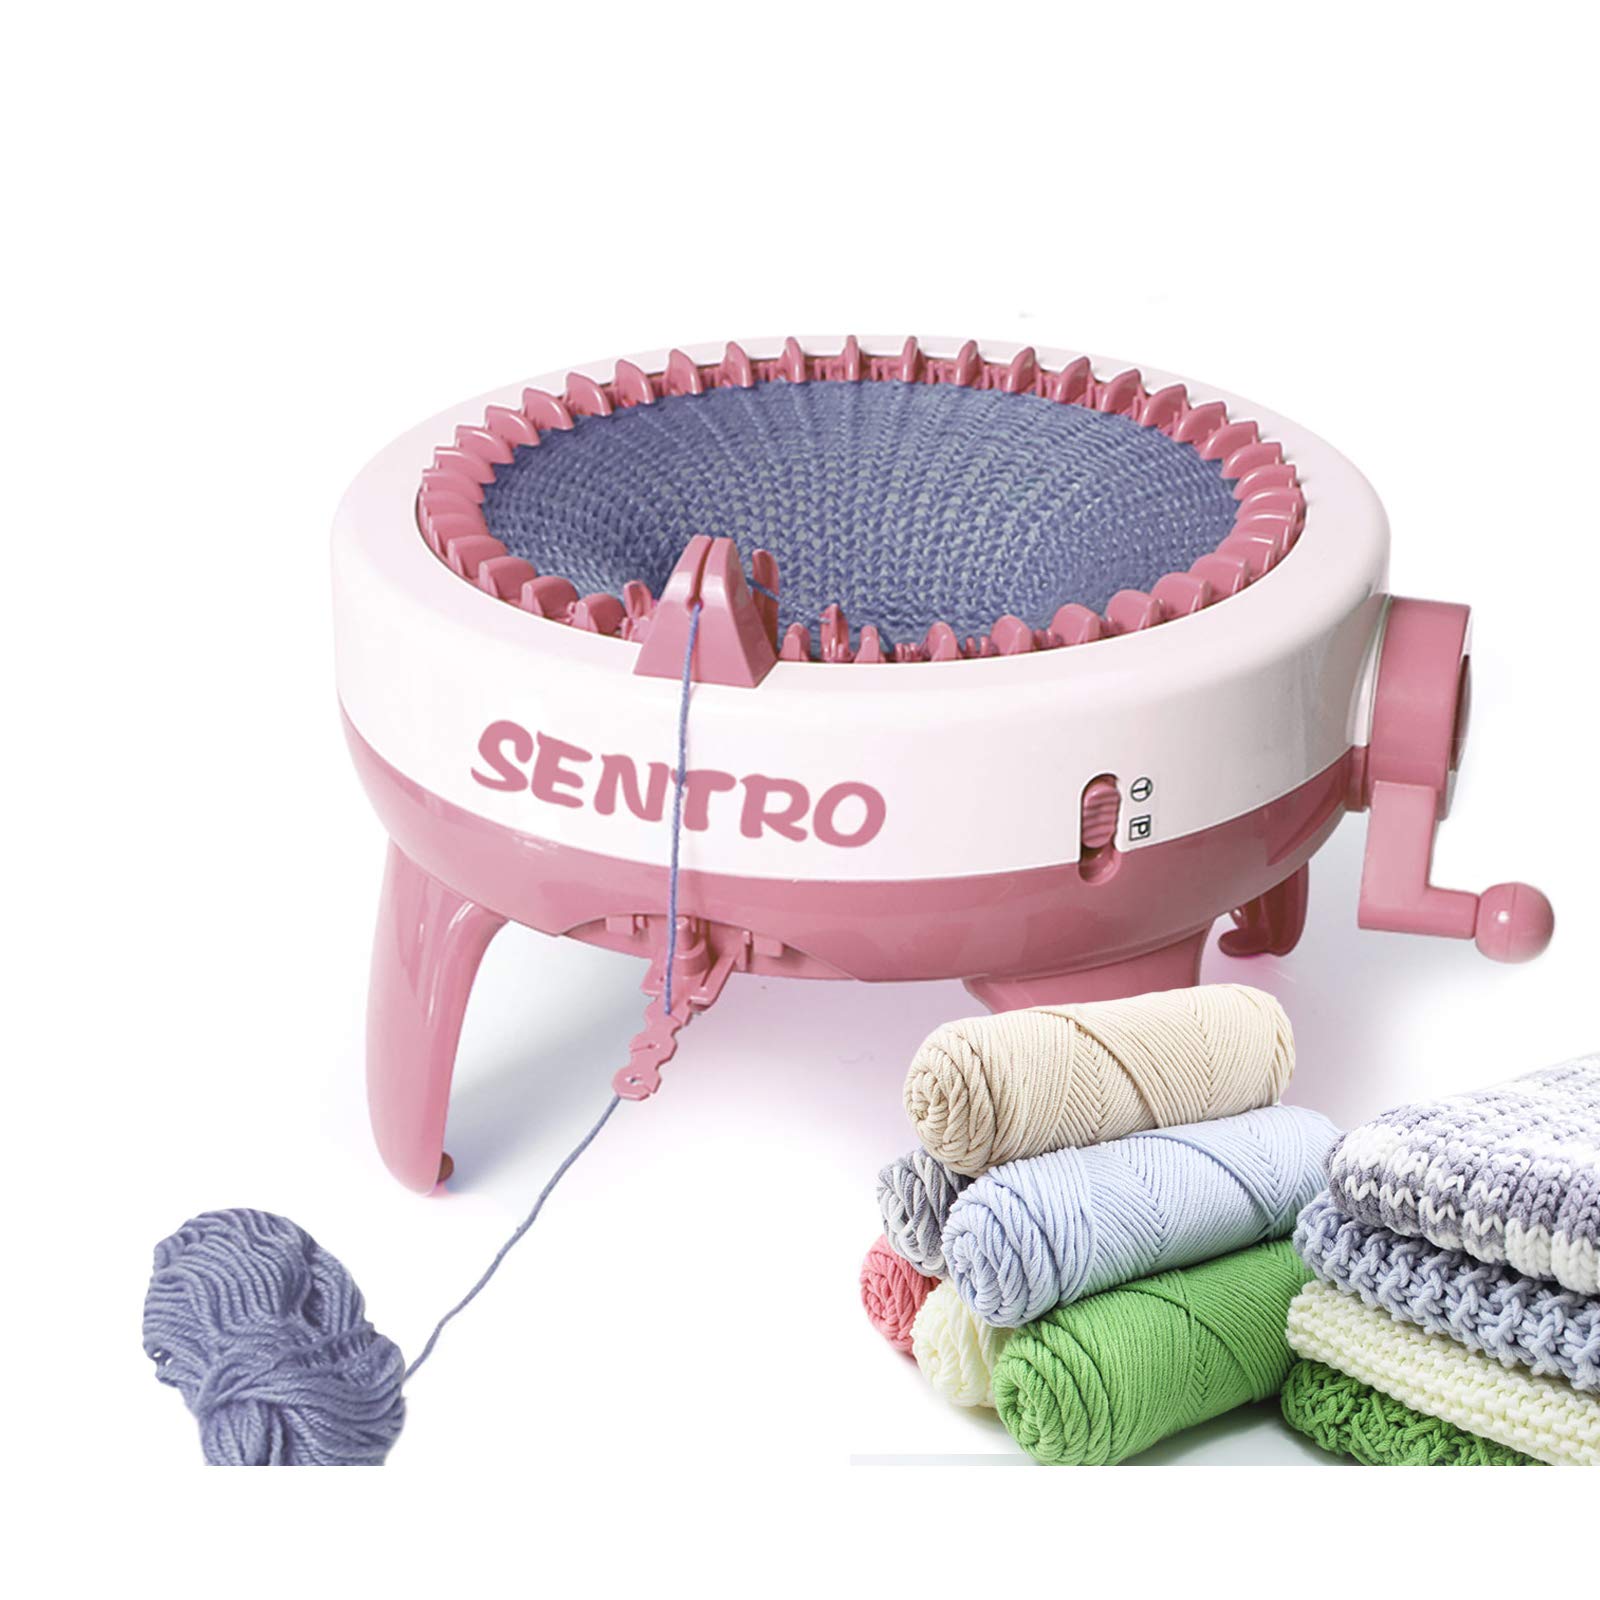 Sentro Knitting Machine, 48 Needles Knitting Loom Machine with Row Counter,  Knitting Board Rotating Double Knit Loom Machine Kit